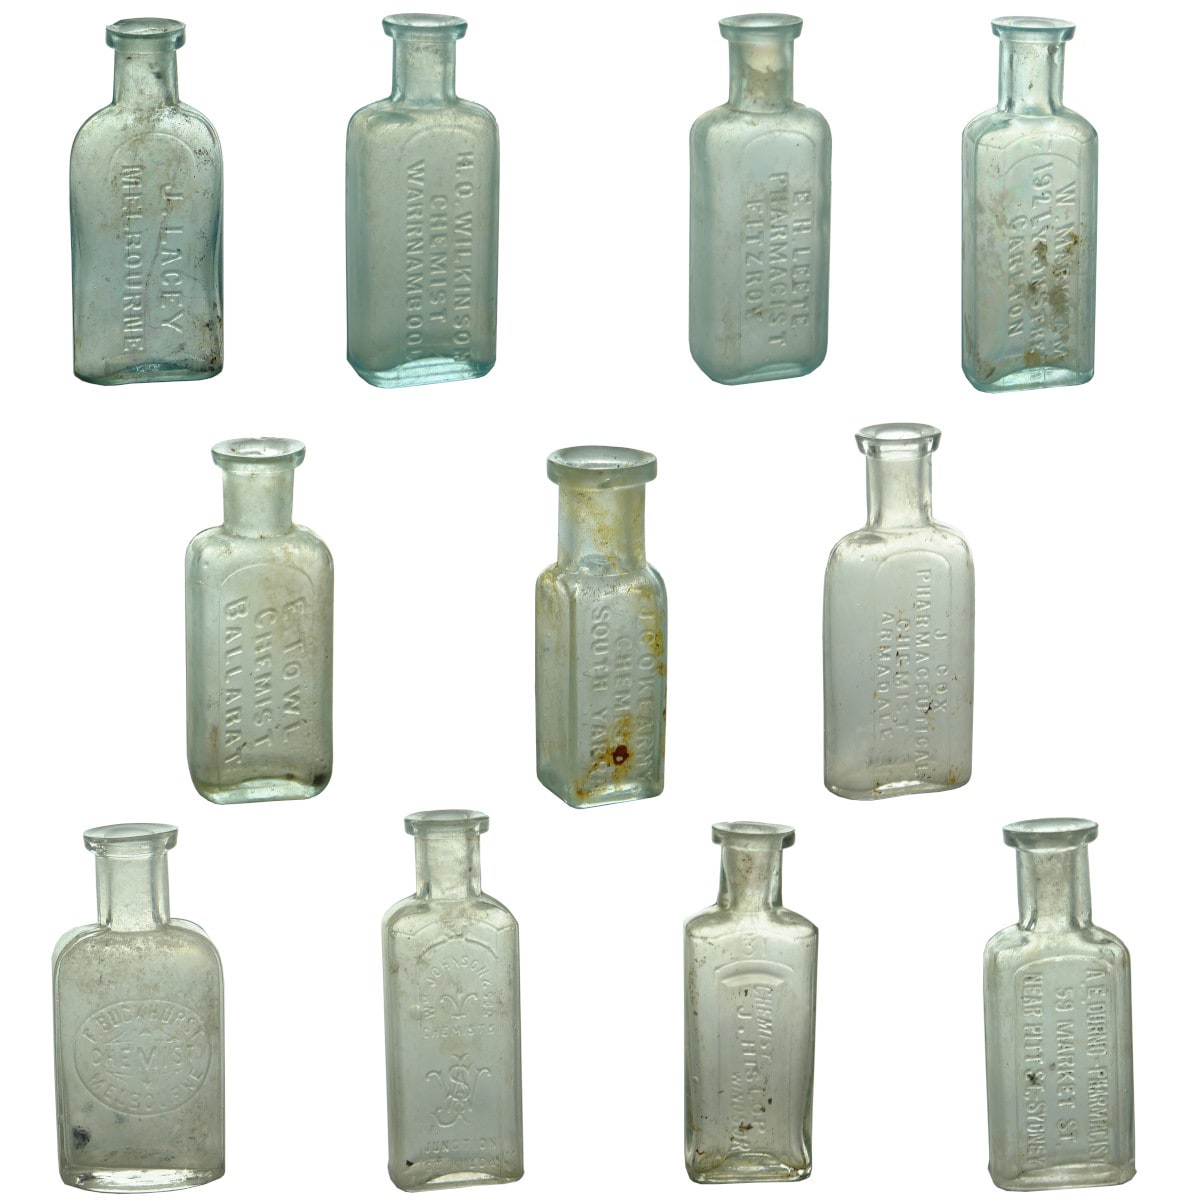 11 x 1 oz or smaller chemist botles: Lacey; Wilkinson; Leete; Markham; Towl; O'Kearny; Cox; Buckhurst; Johnson; Hislop; Durno.